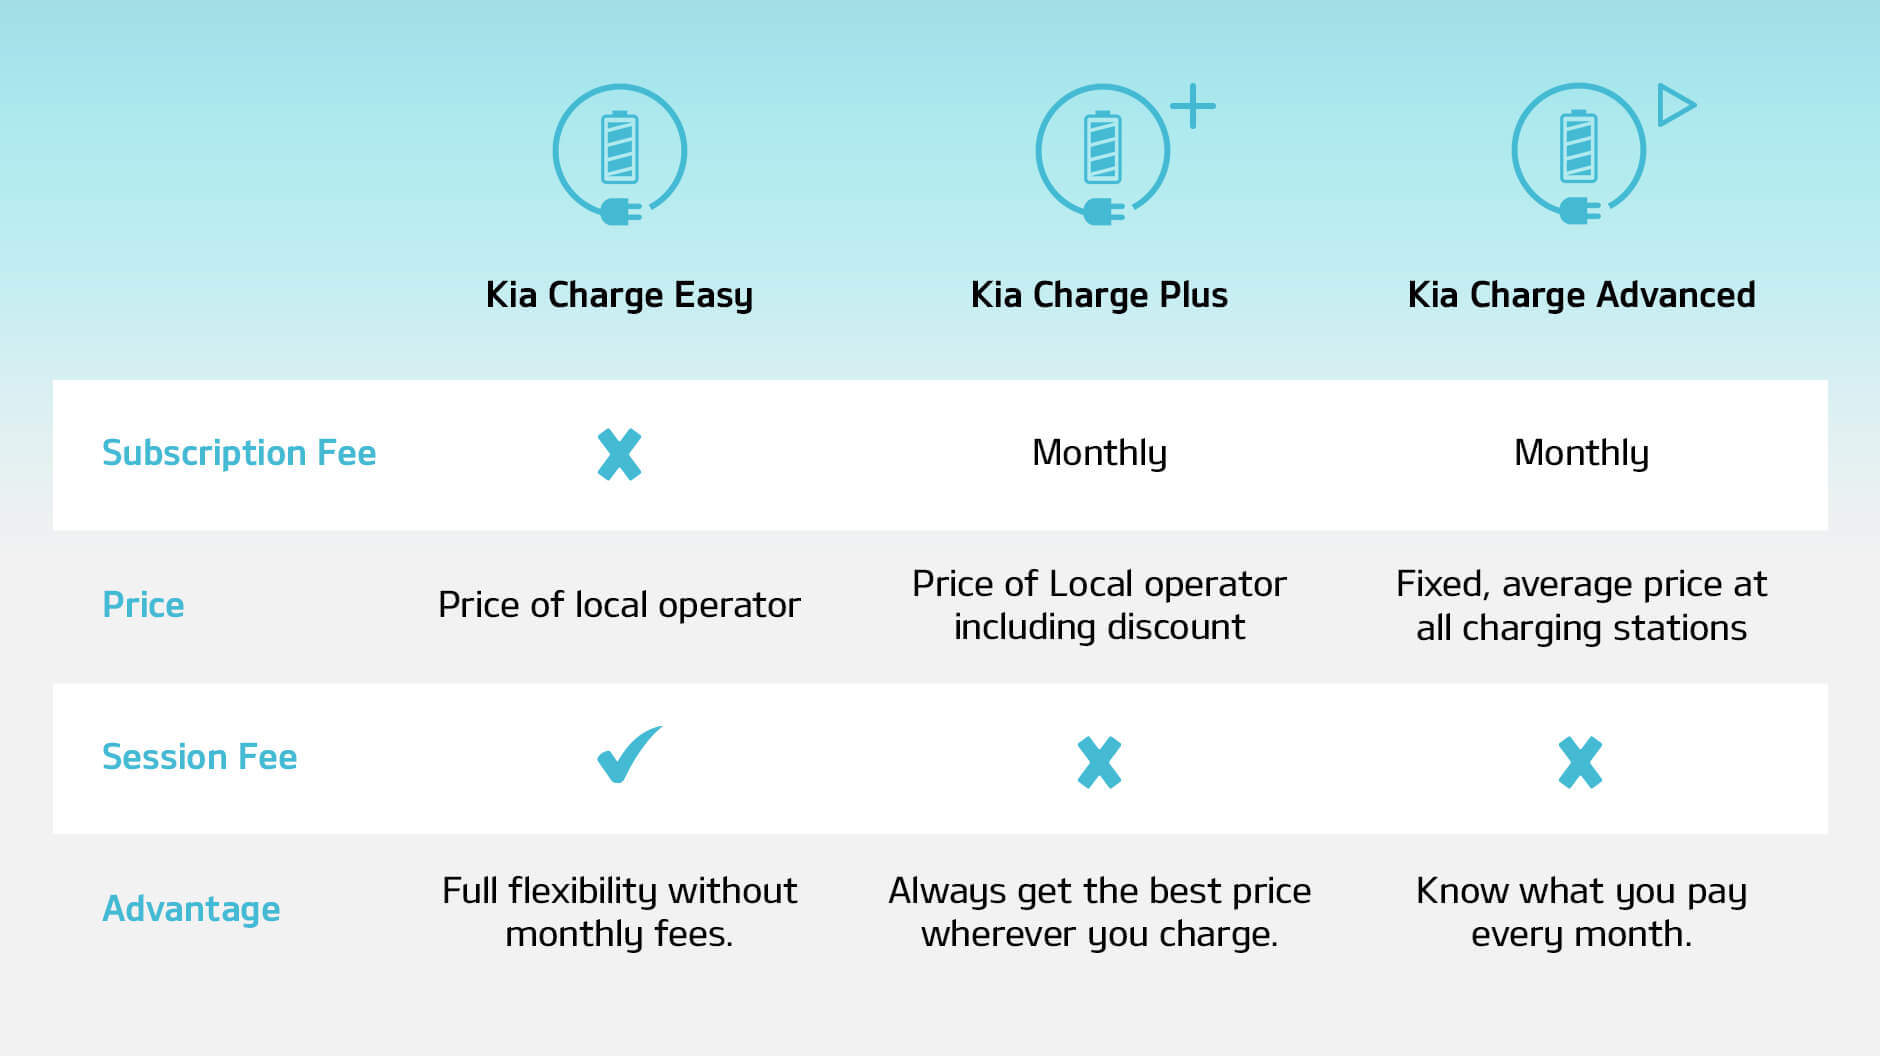 KiaCharge tariffs